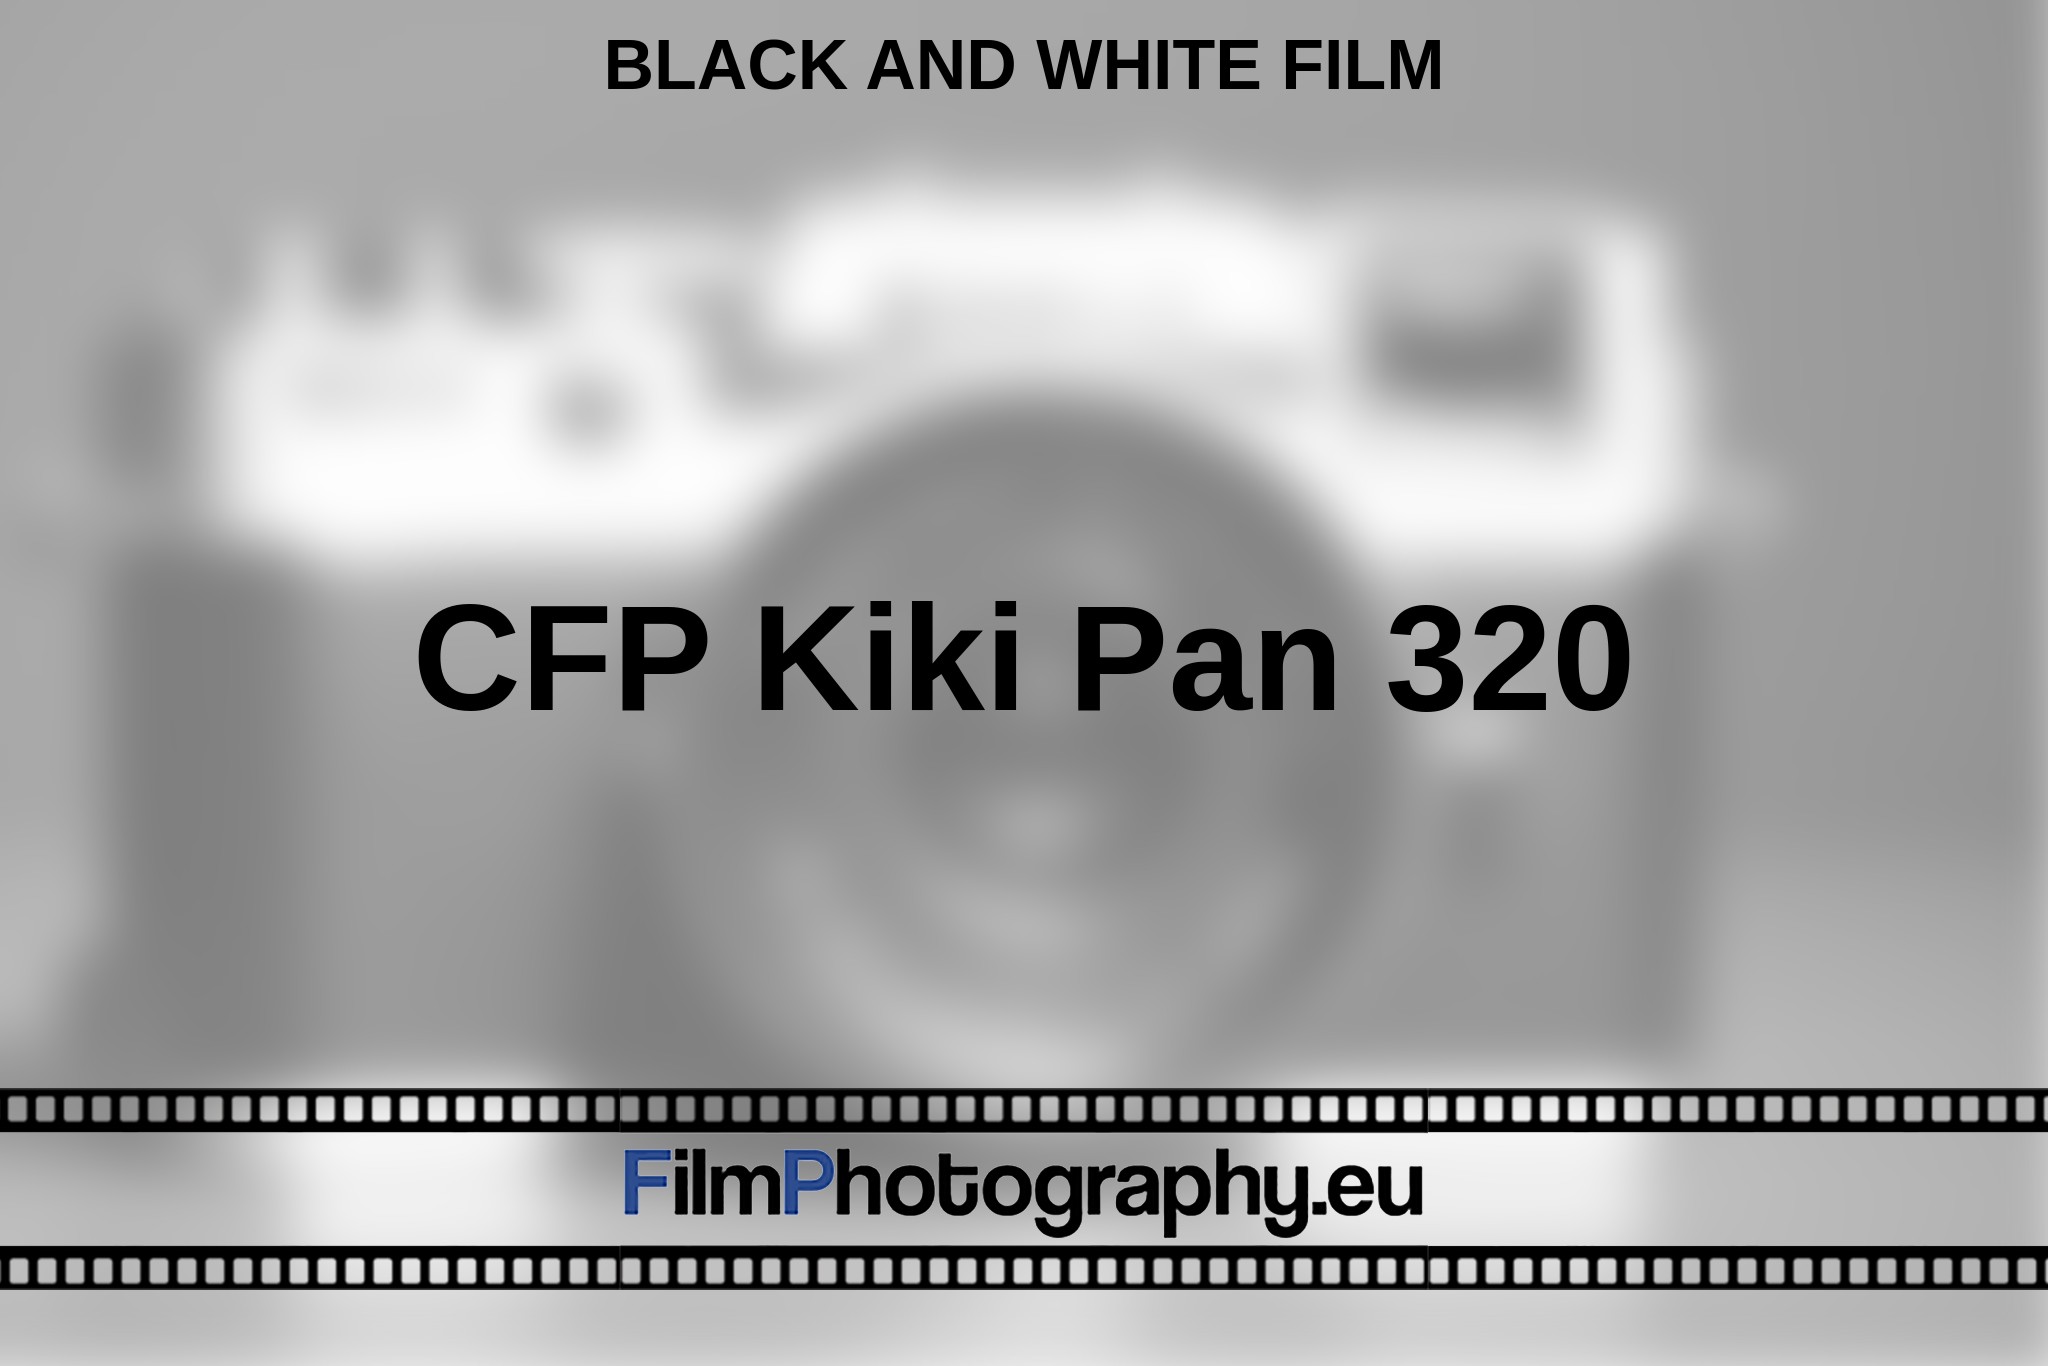 cfp-kiki-pan-320-black-and-white-film-en-bnv.jpg